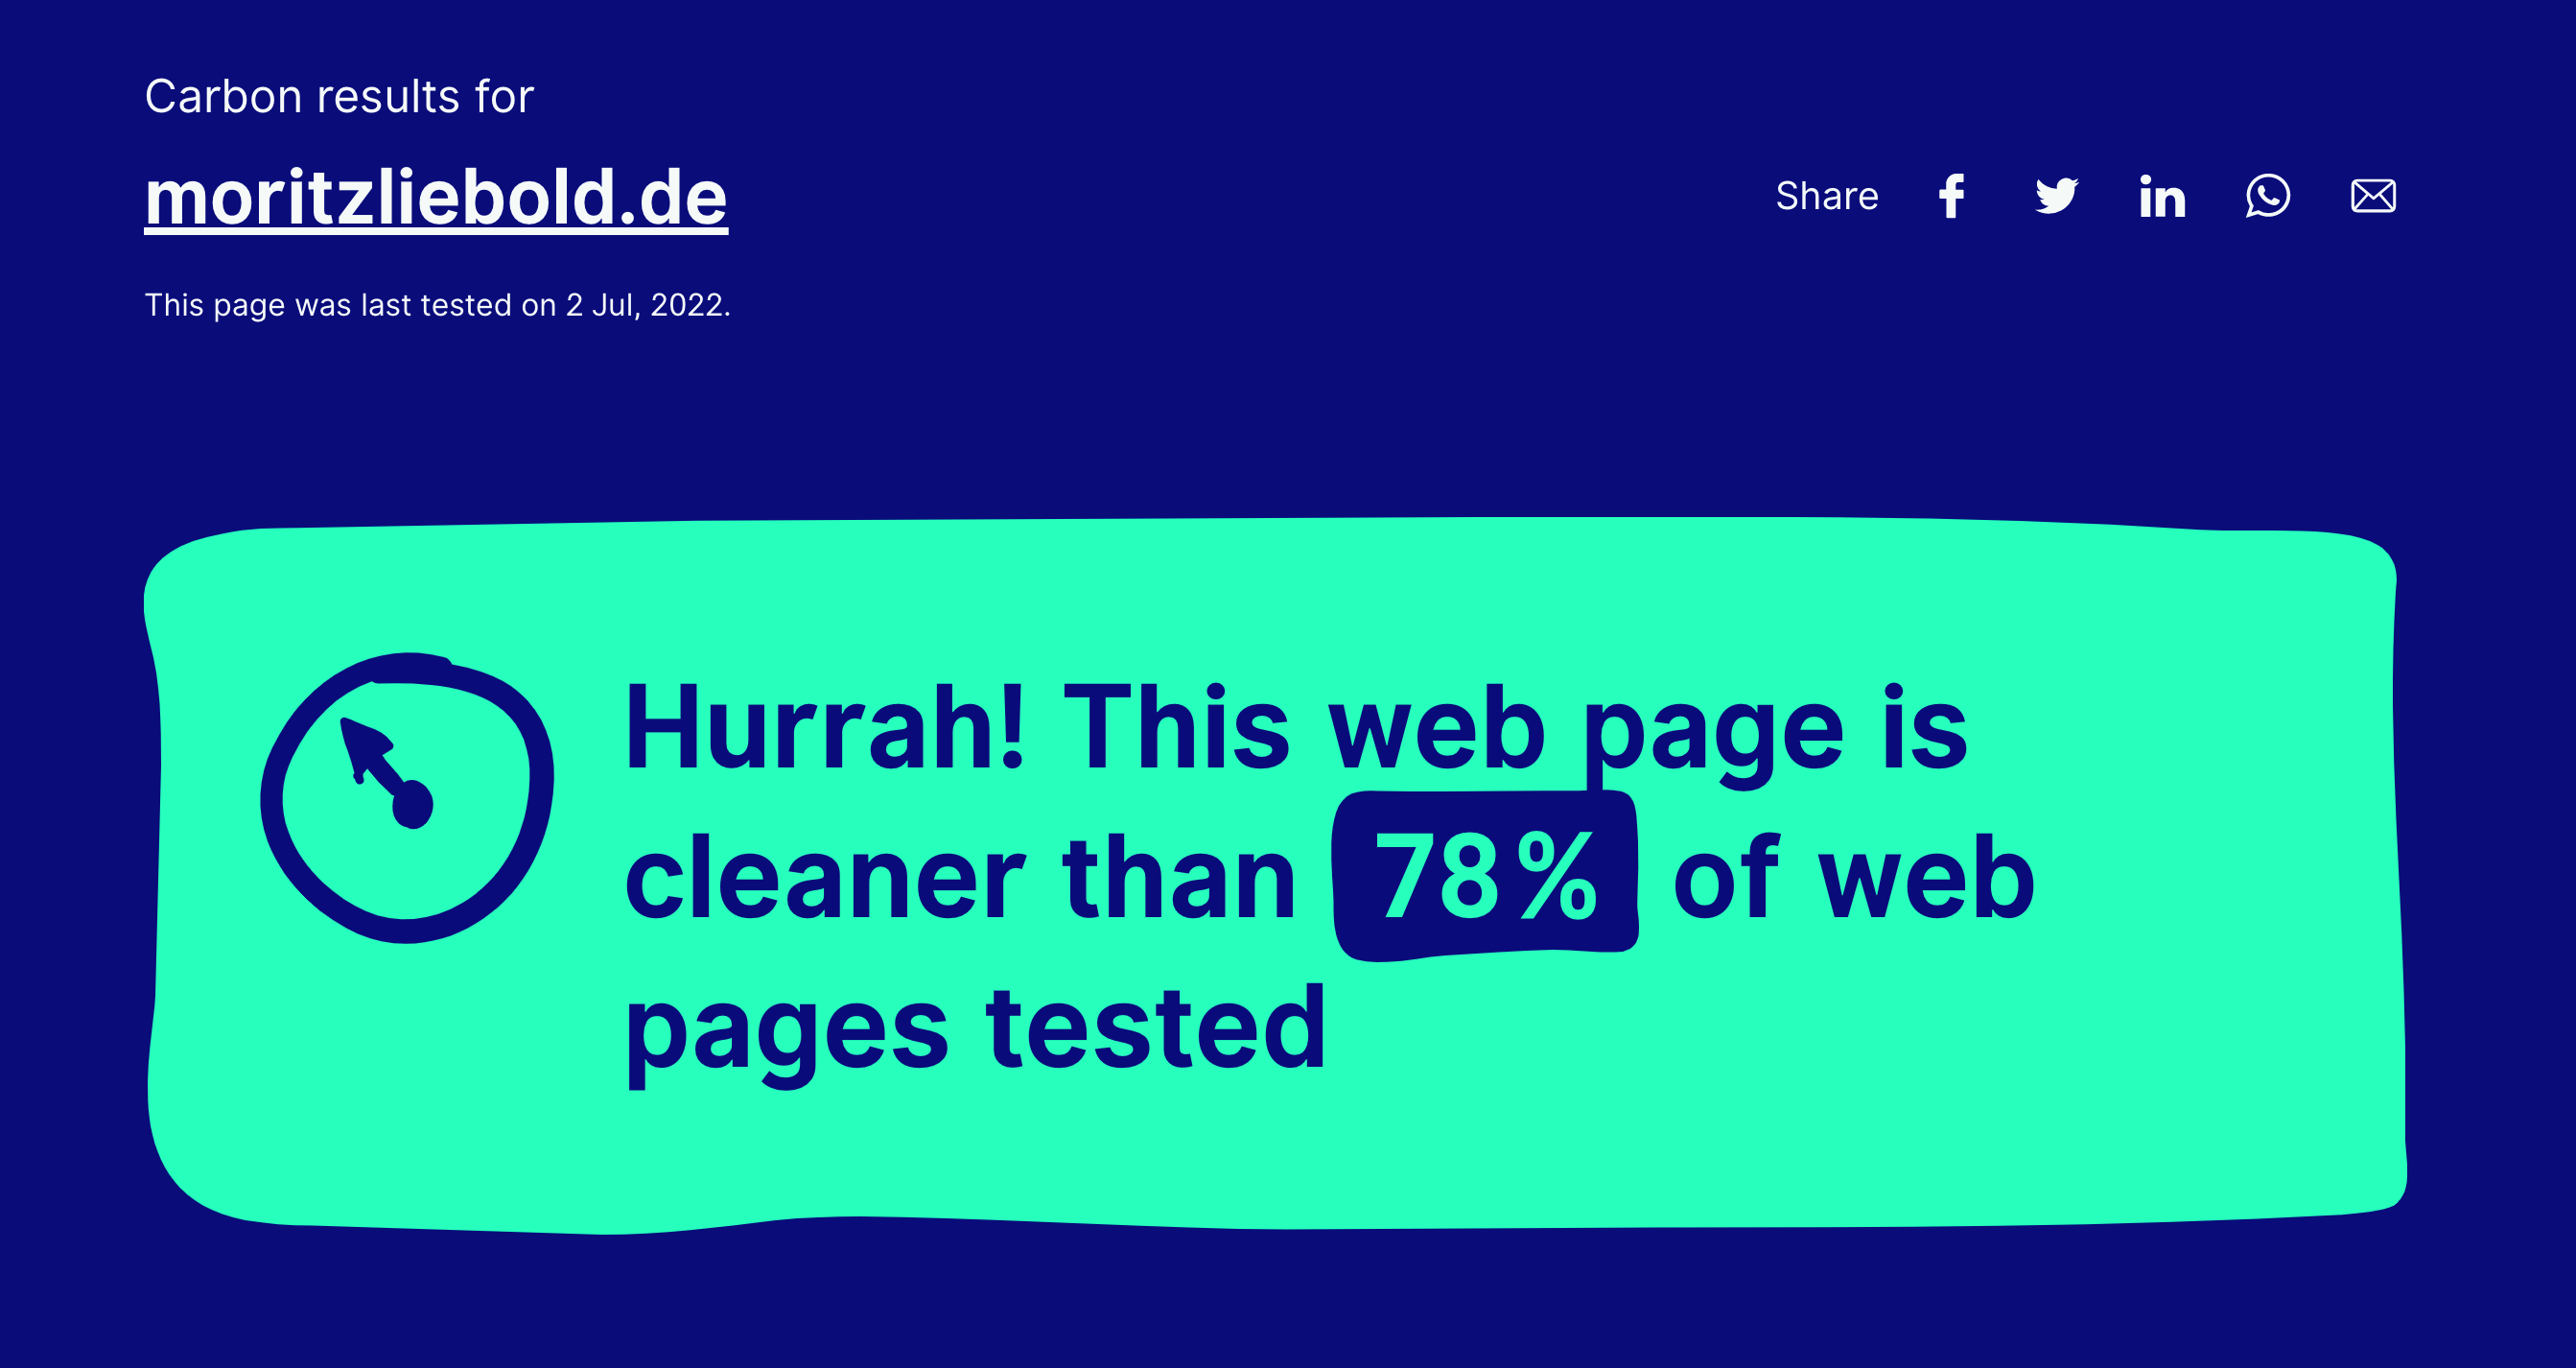 moritzliebold.de ist sauberer als 78 % der Web Pages.